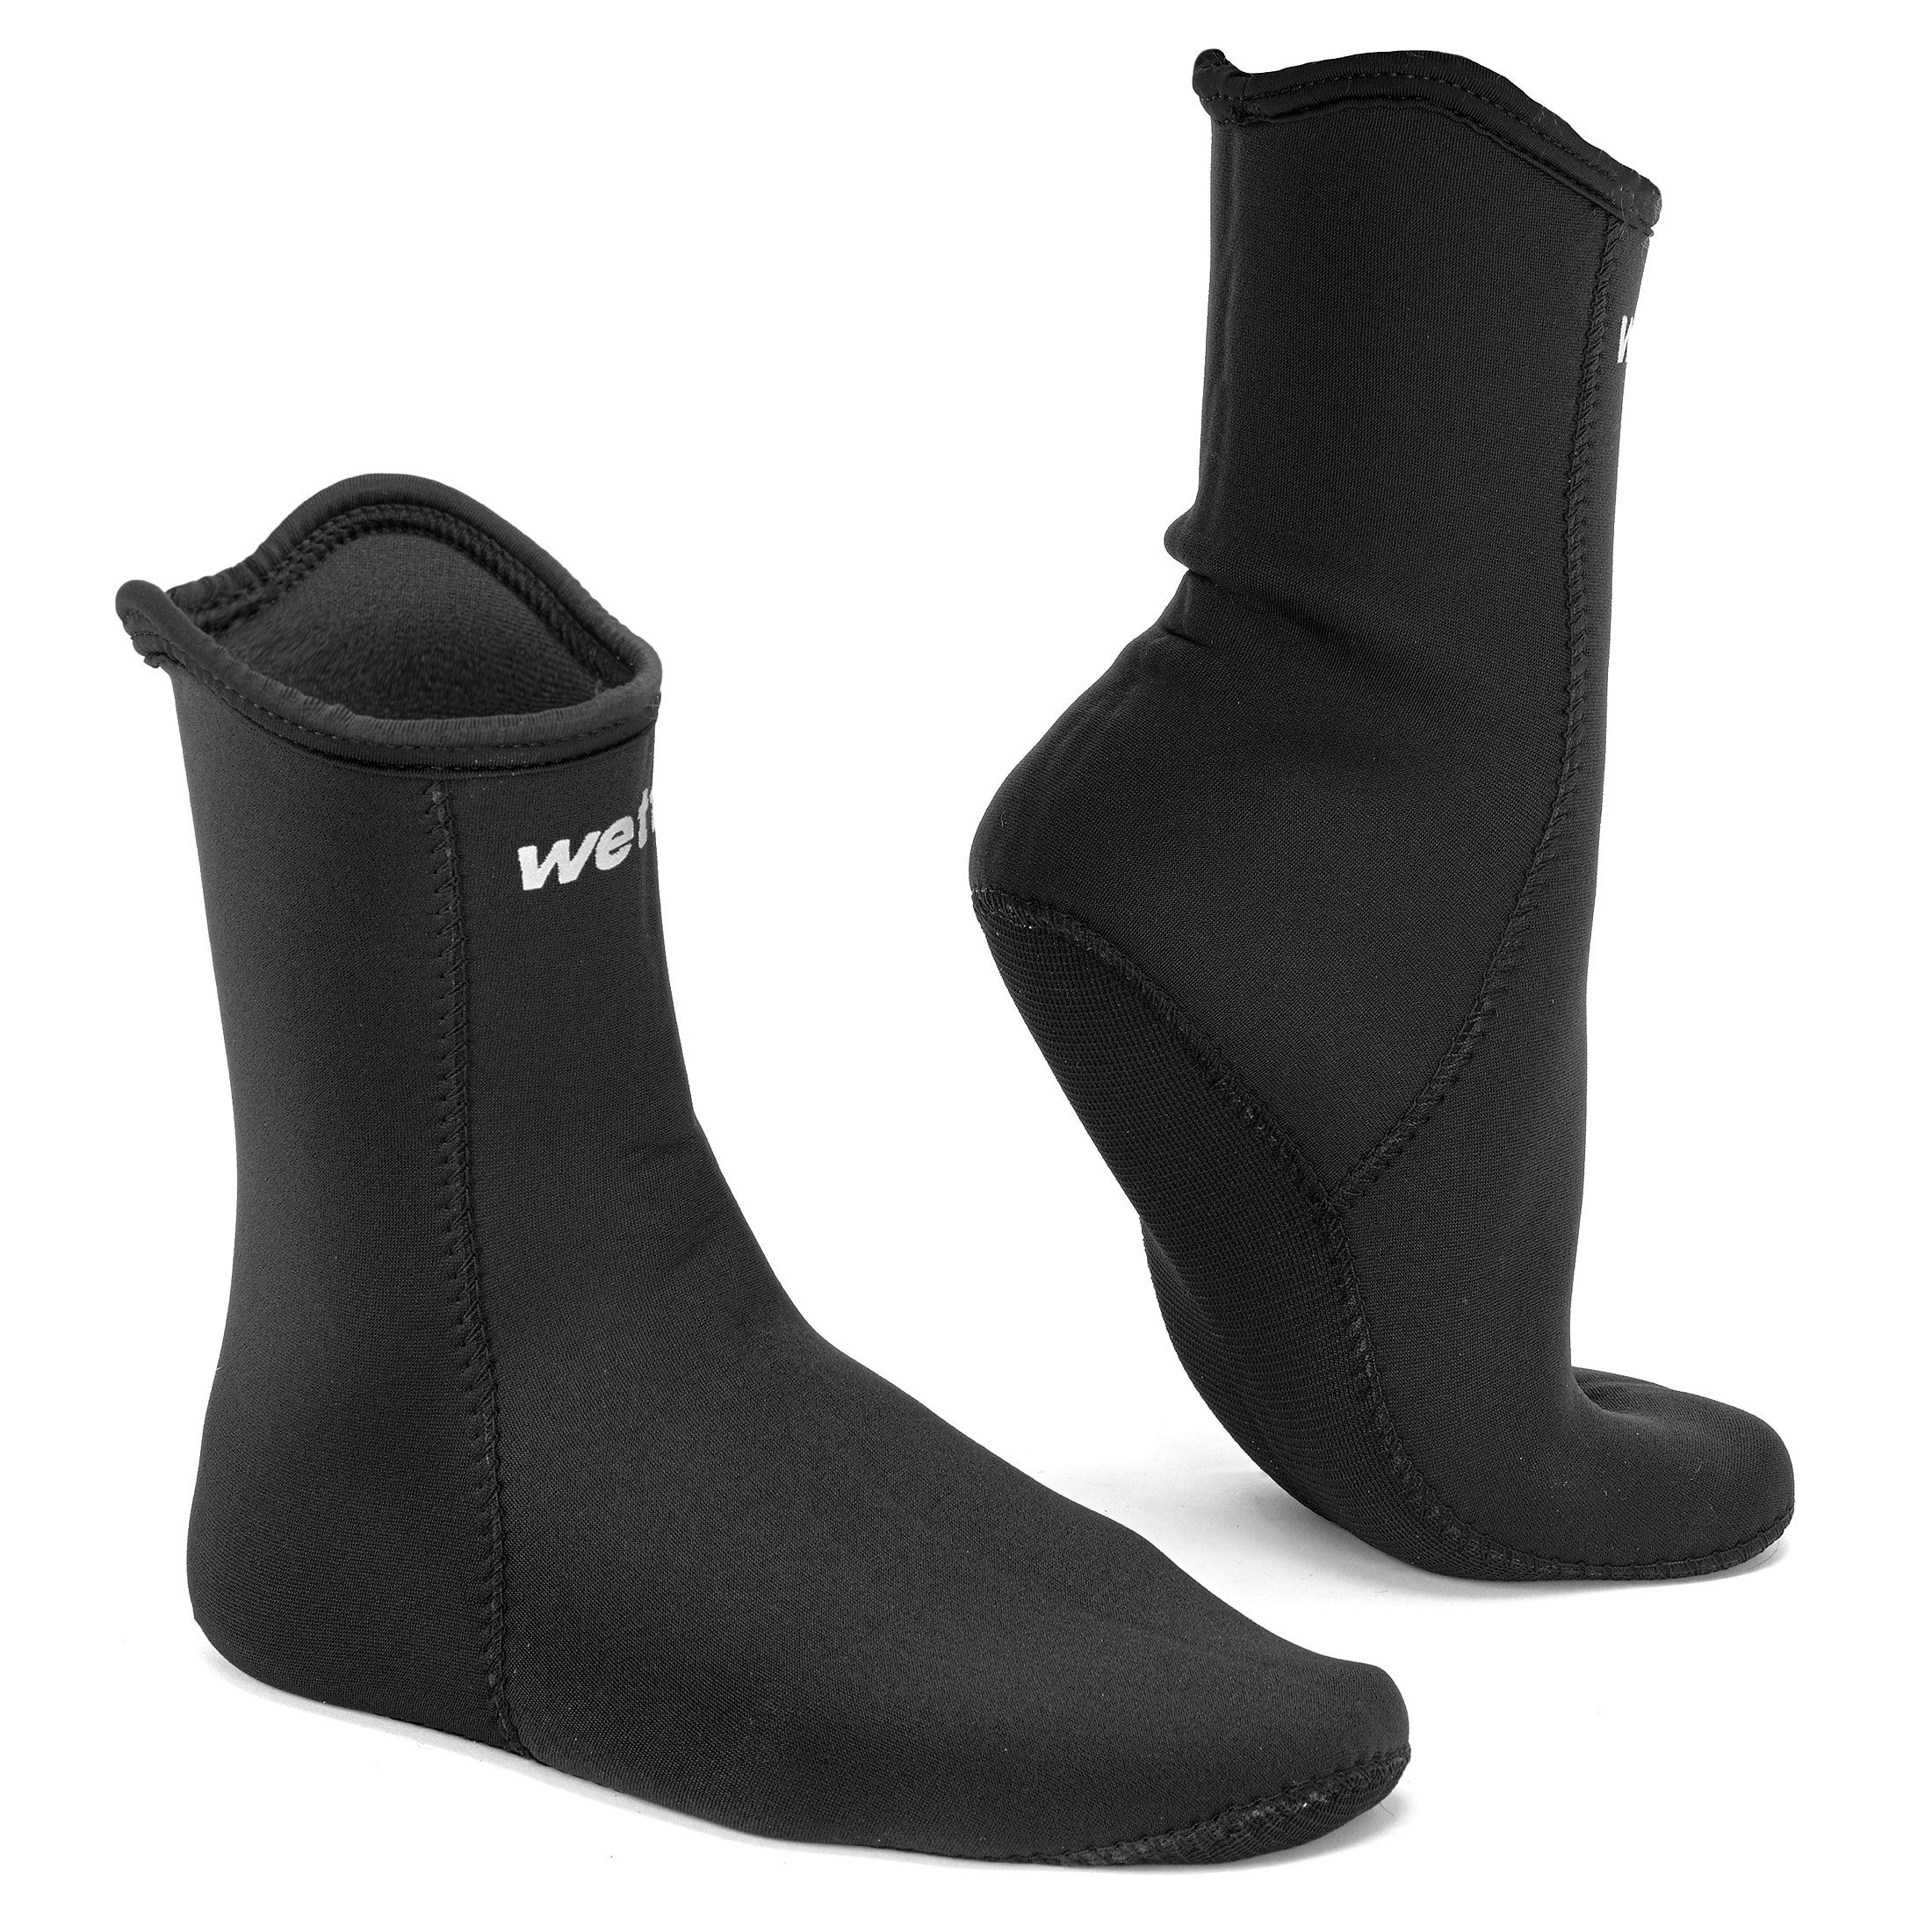 Wettie Neoprene Socks - 3mm (Colour: Predator Camo, Size: 2XL)